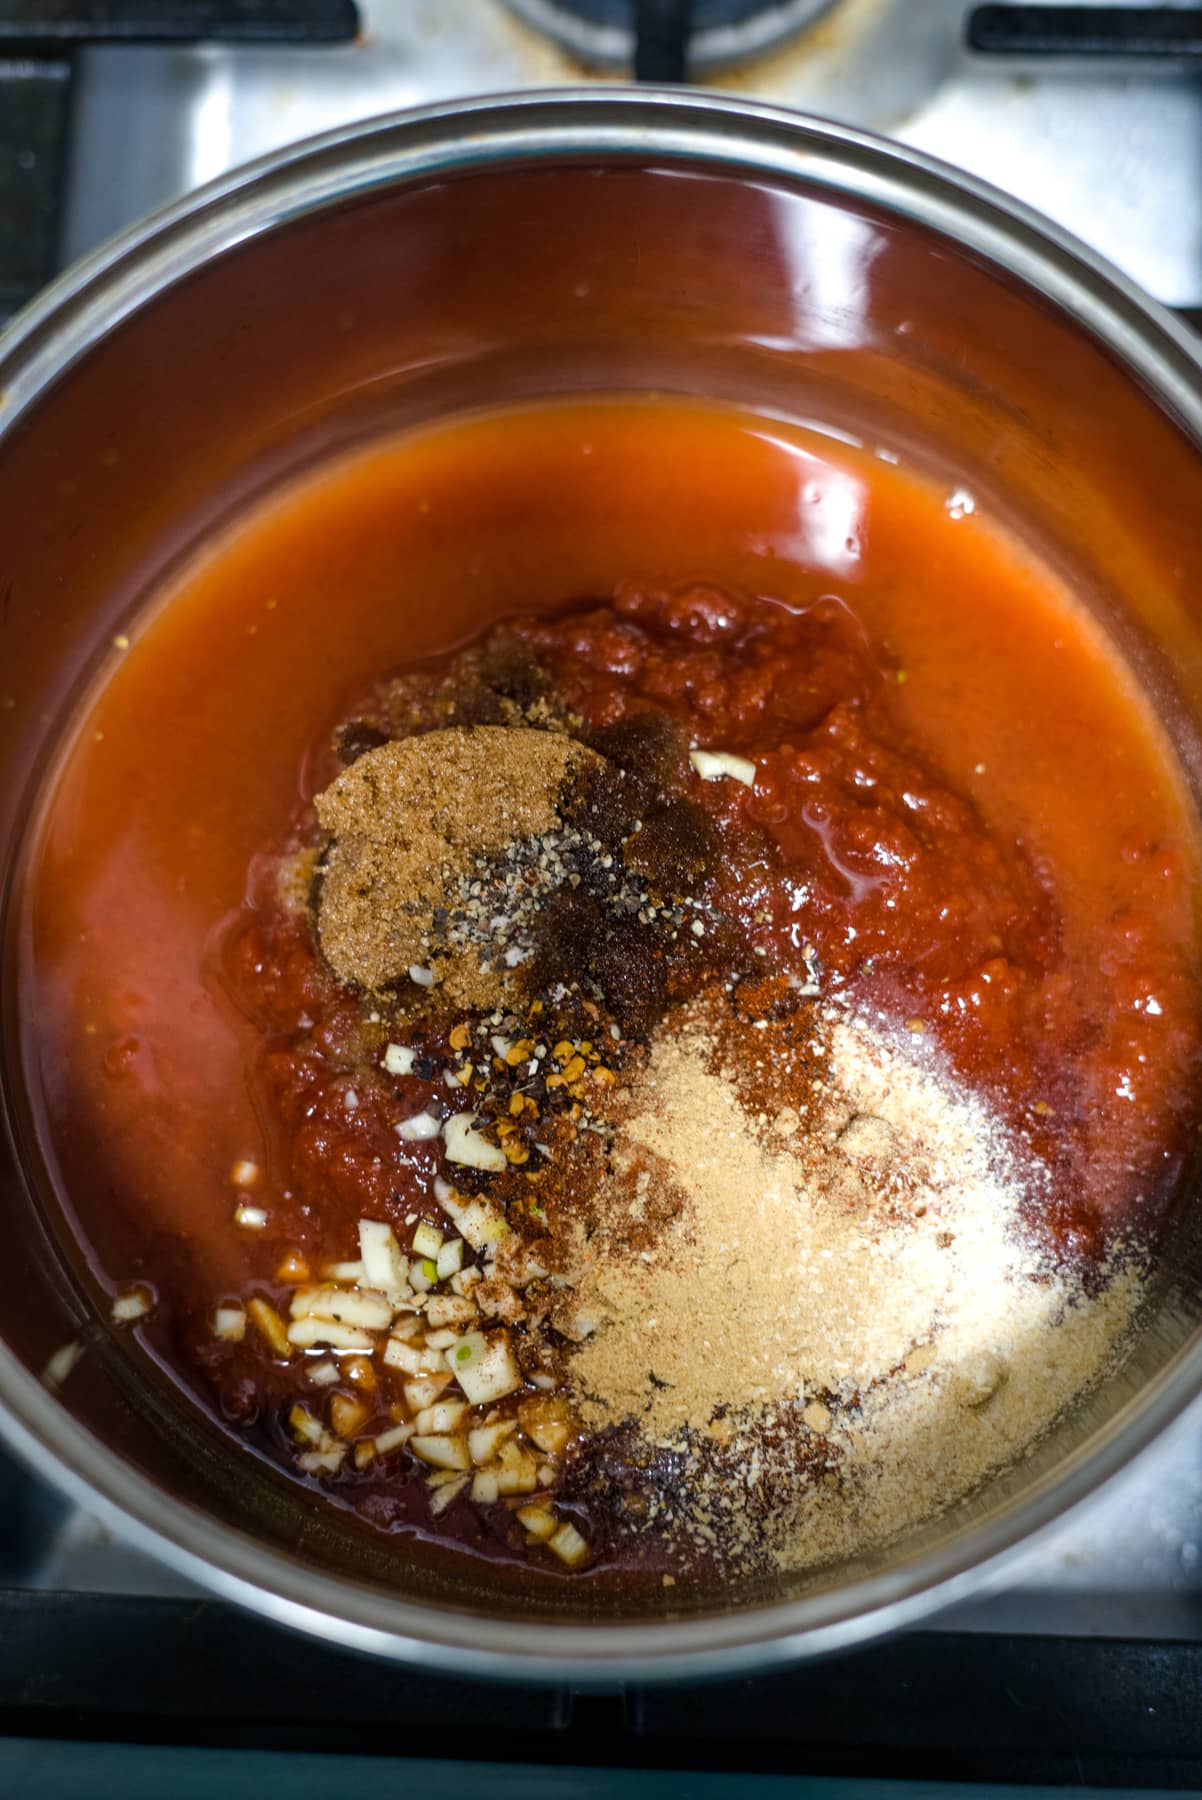 mumbo sauce ingredients